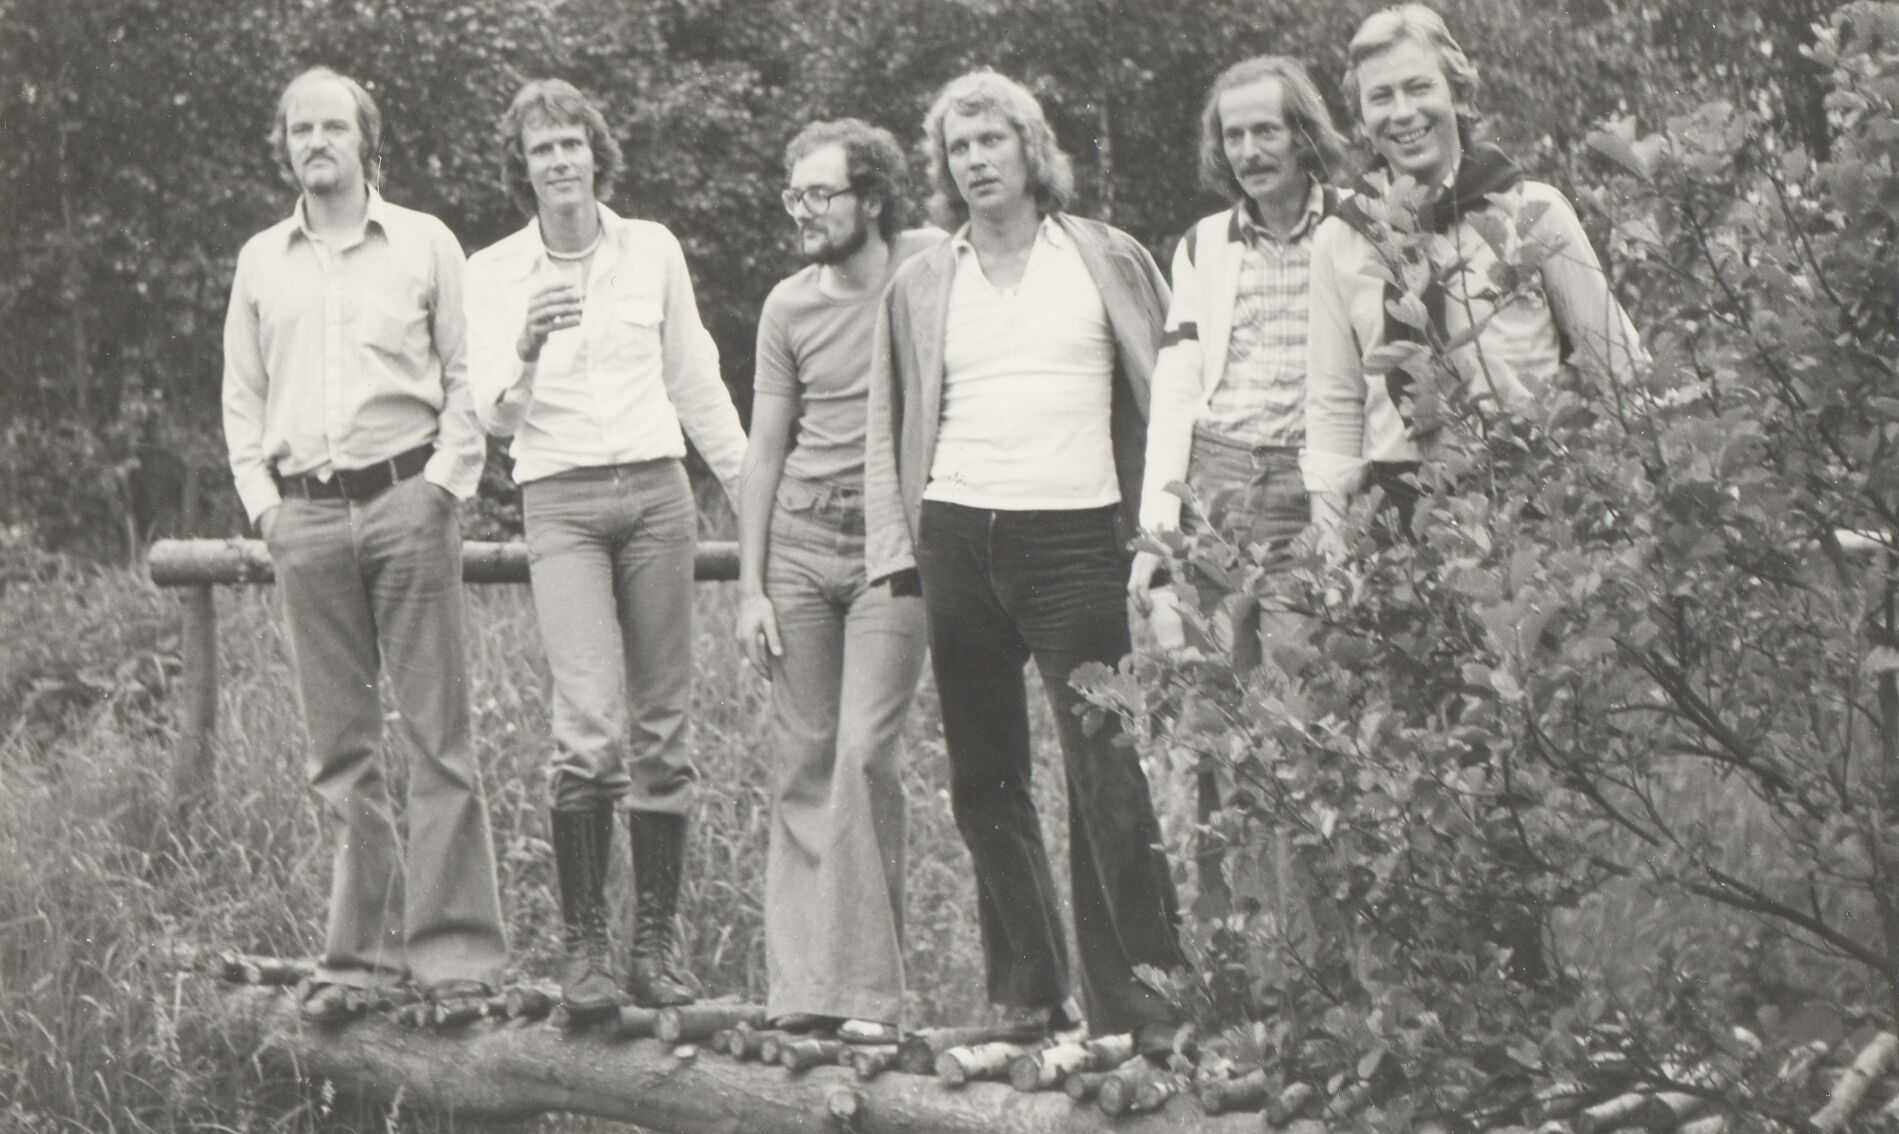 Die Times 1977 (von links): Mülpe Müller, Jochen "Jocki" Laschinsky, Charly Meier, Walli Jacobs, Uwi Hemken, Gunnie Weber